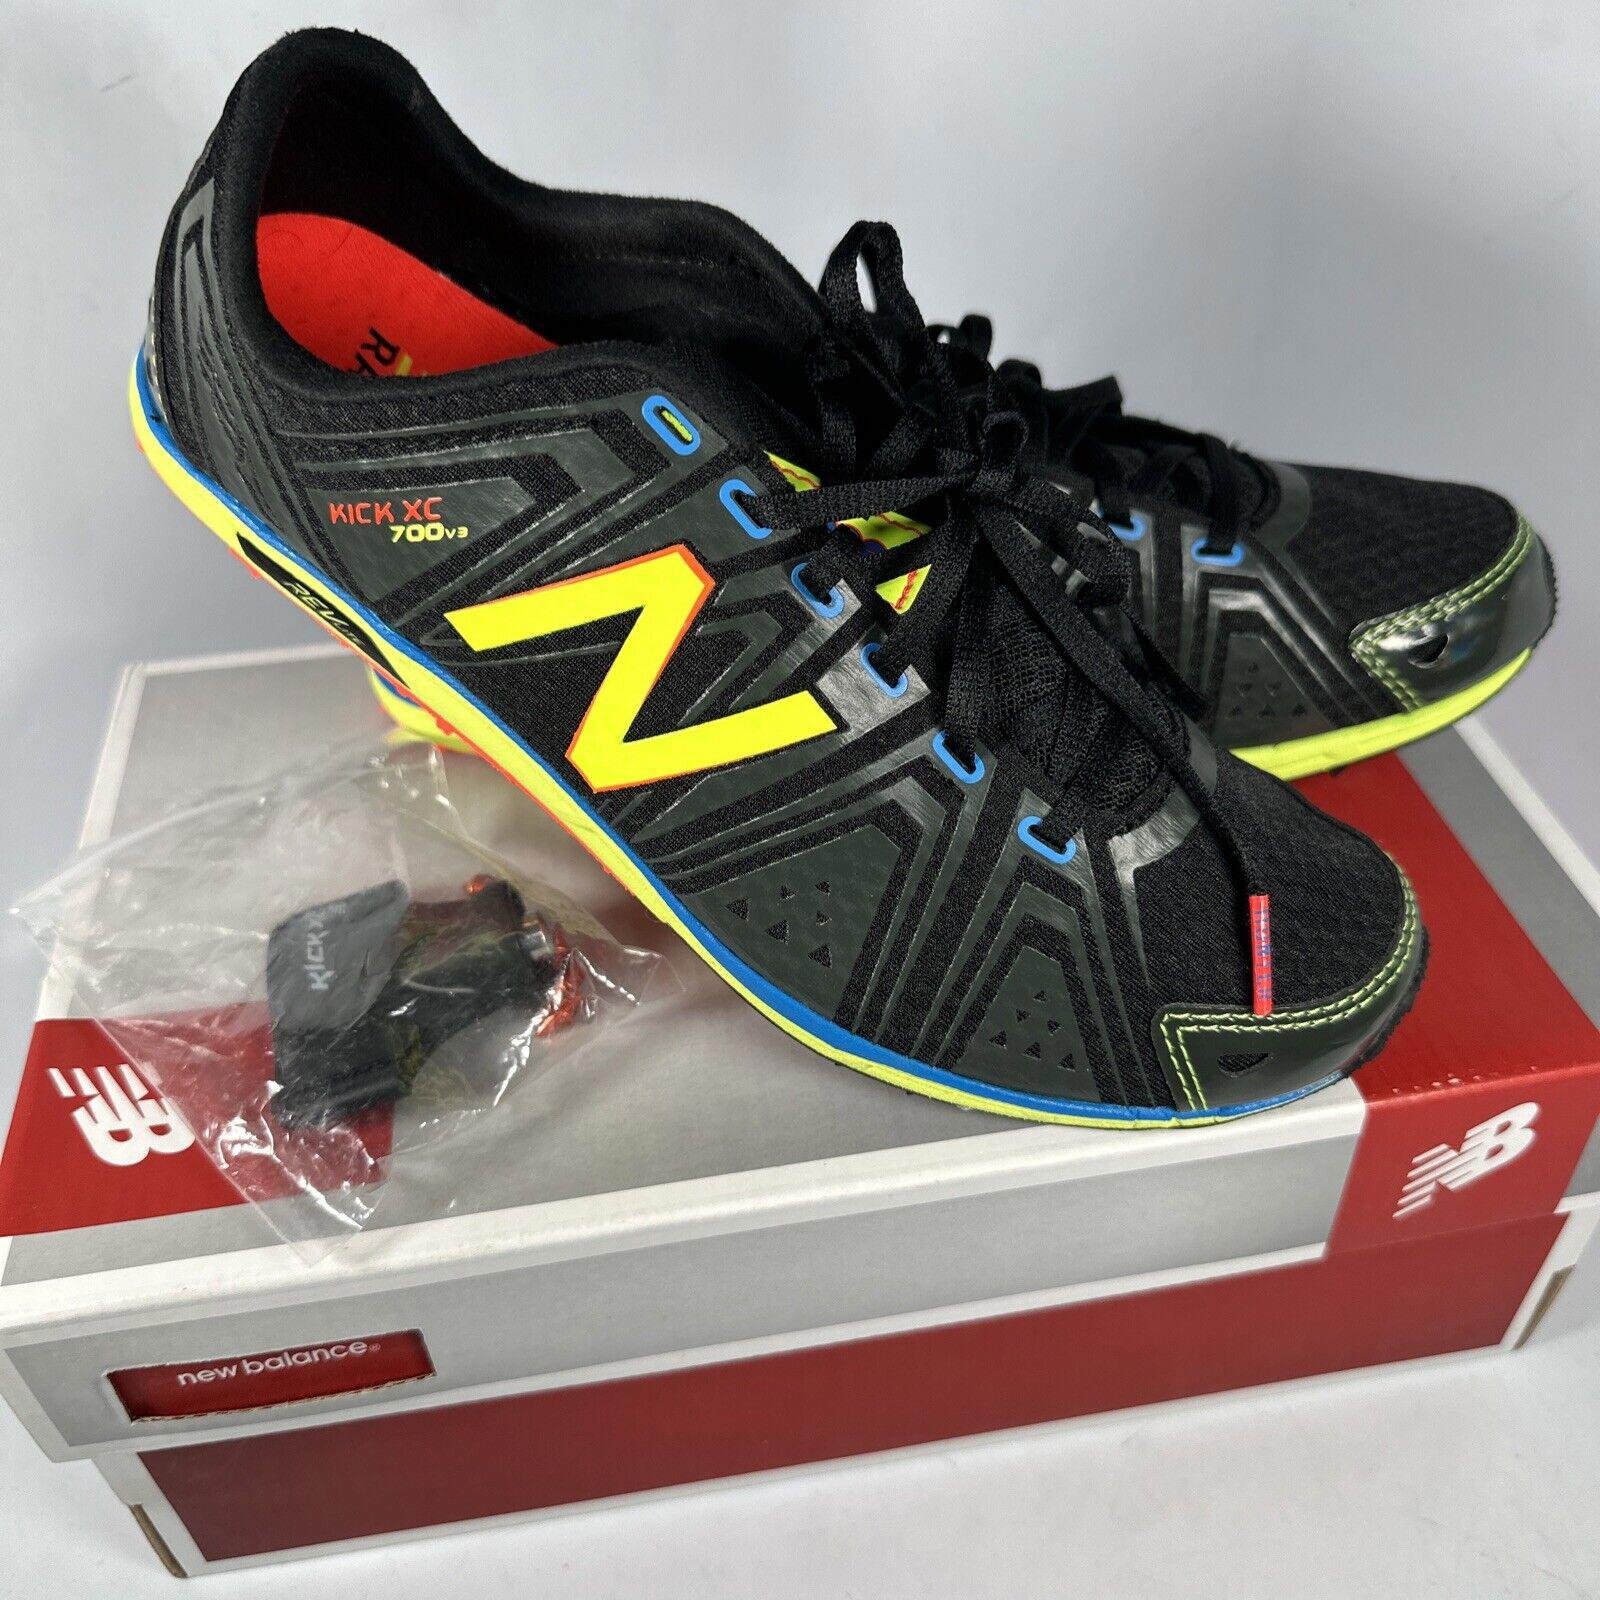 New Balance | Kick XC 700v3 | Track & Field Running Spike Shoes | Sz 7.5 8Pcp5jDOs